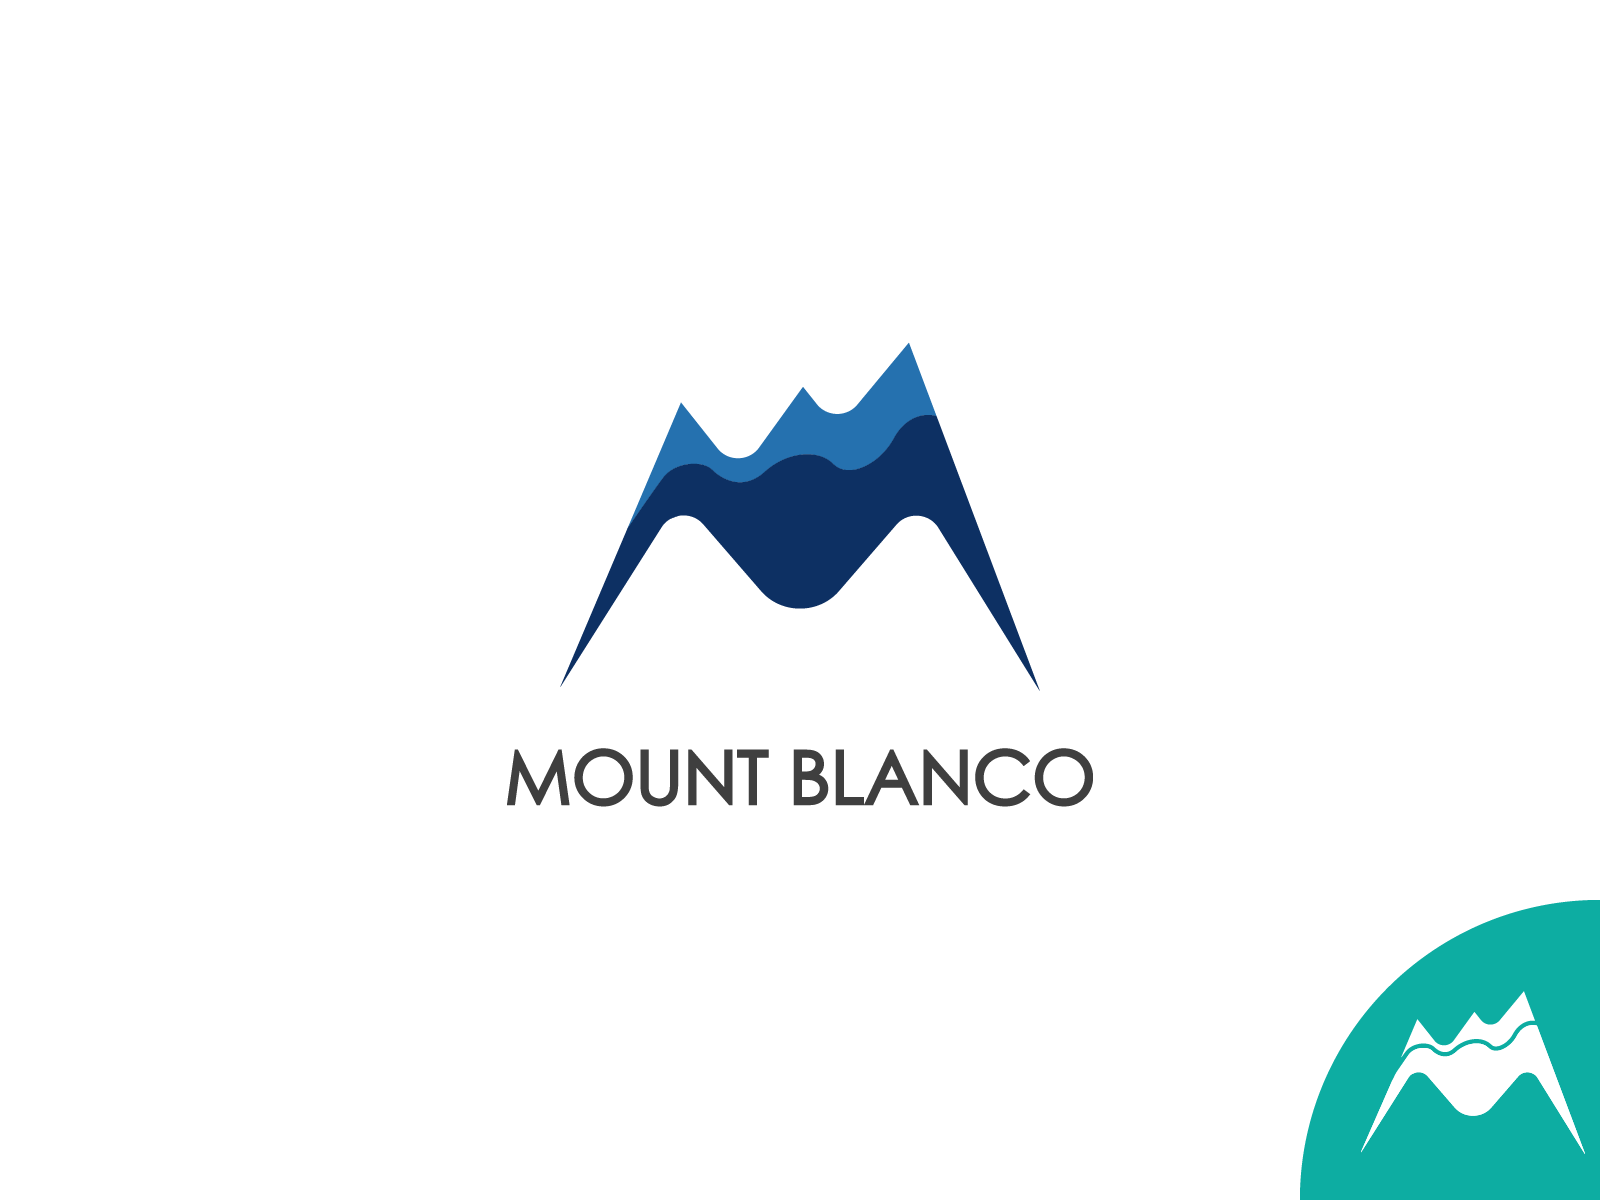 Mount Blanco Logo by Faizan Ali on Dribbble